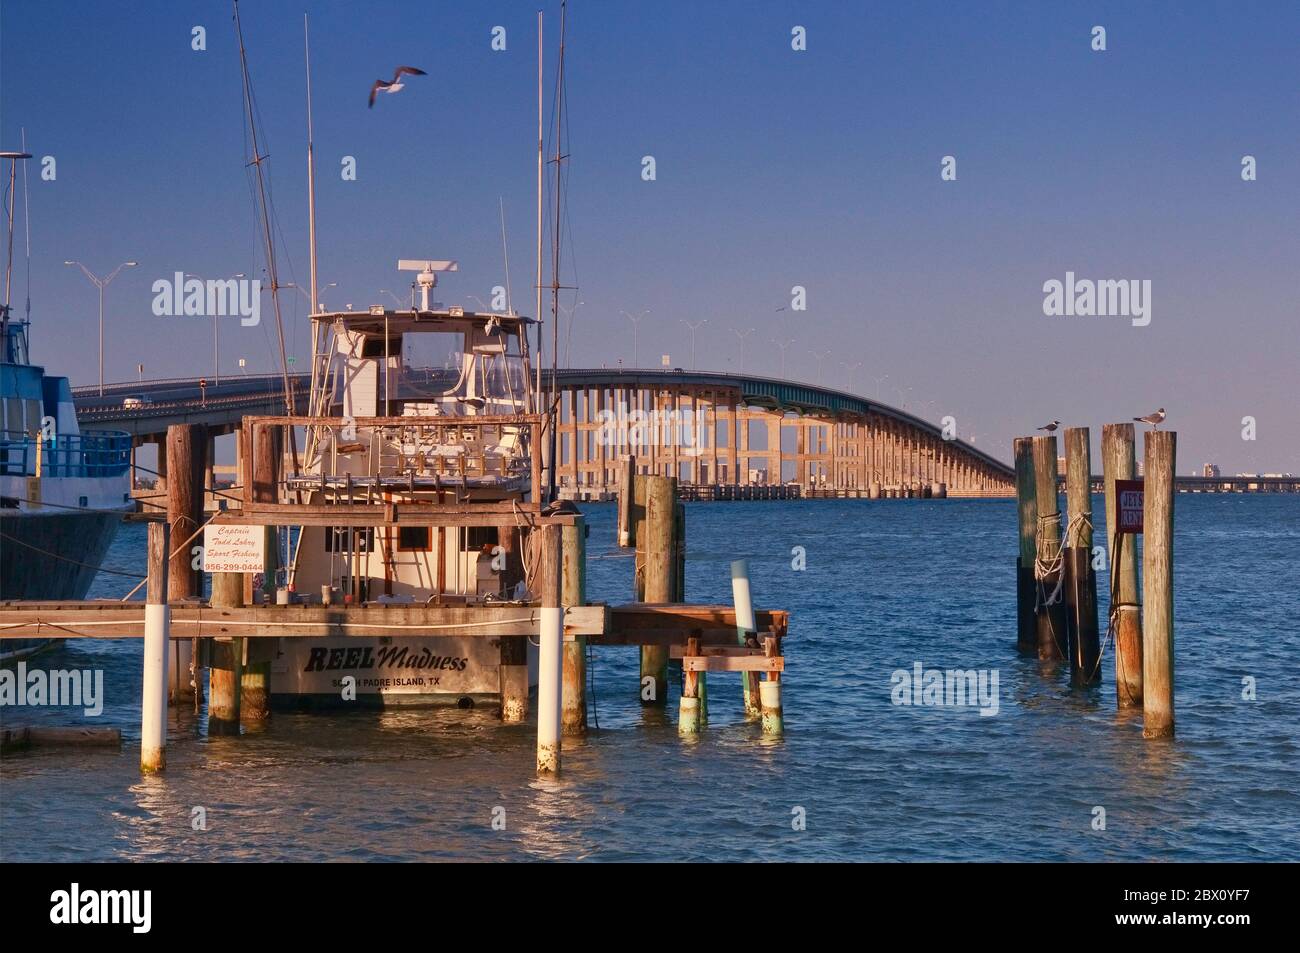 Shrimp boat, Laguna Madre Causeway bridge behind, Port Isabel, Gulf of Mexico seashore, Texas, USA Stock Photo